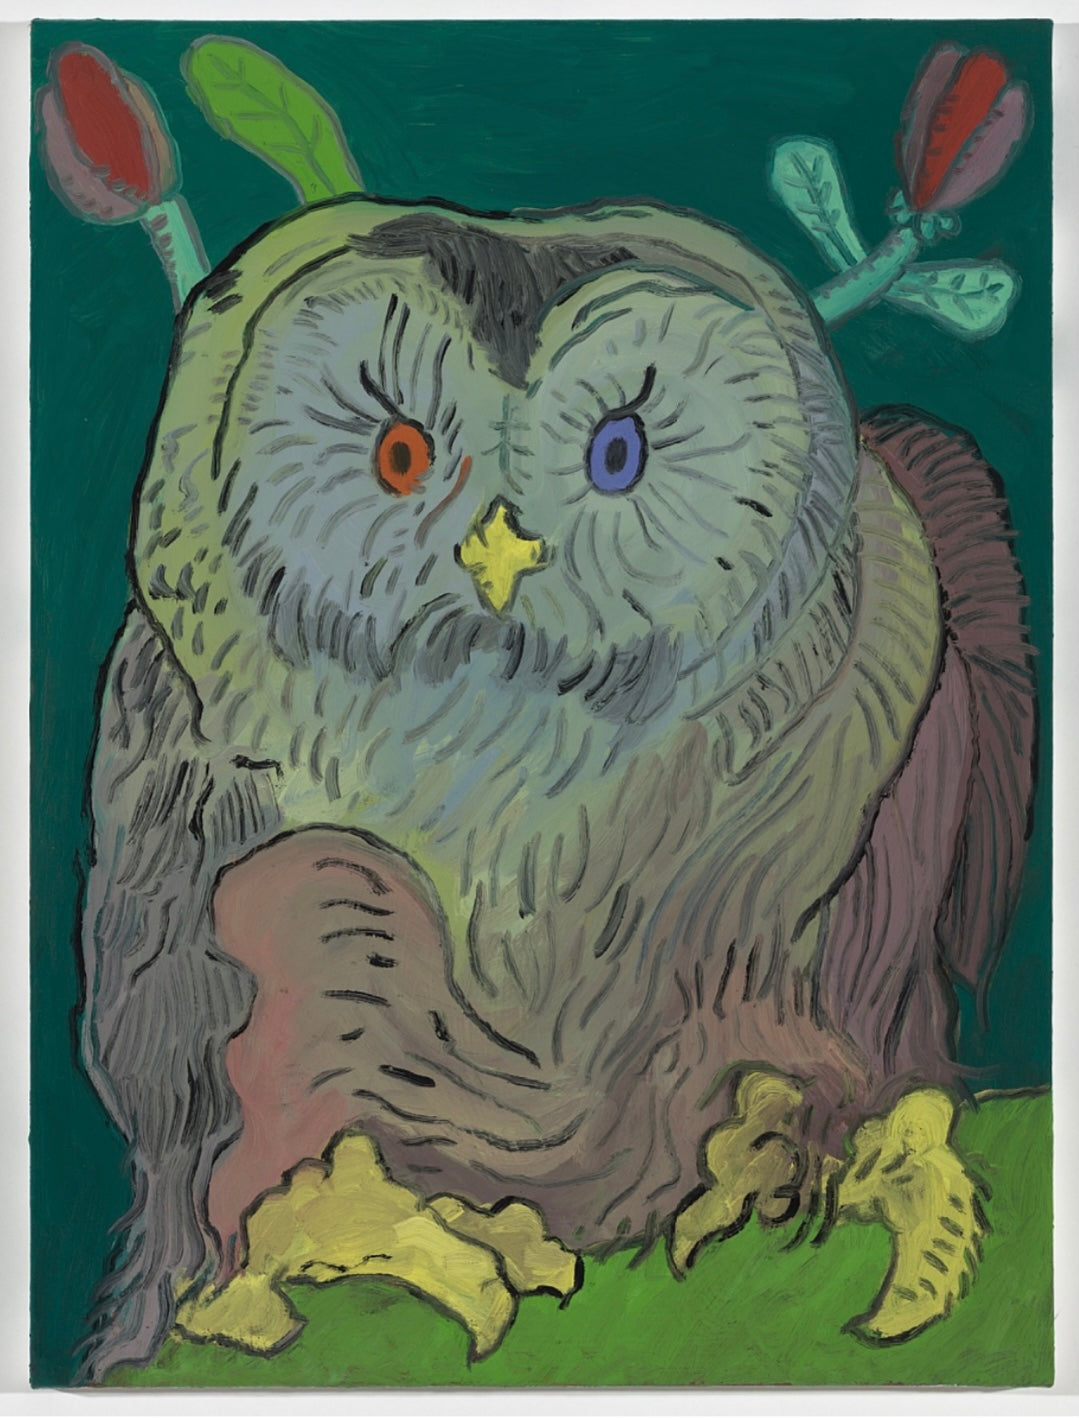 Matt Jones, "Tiepolo's Owl"